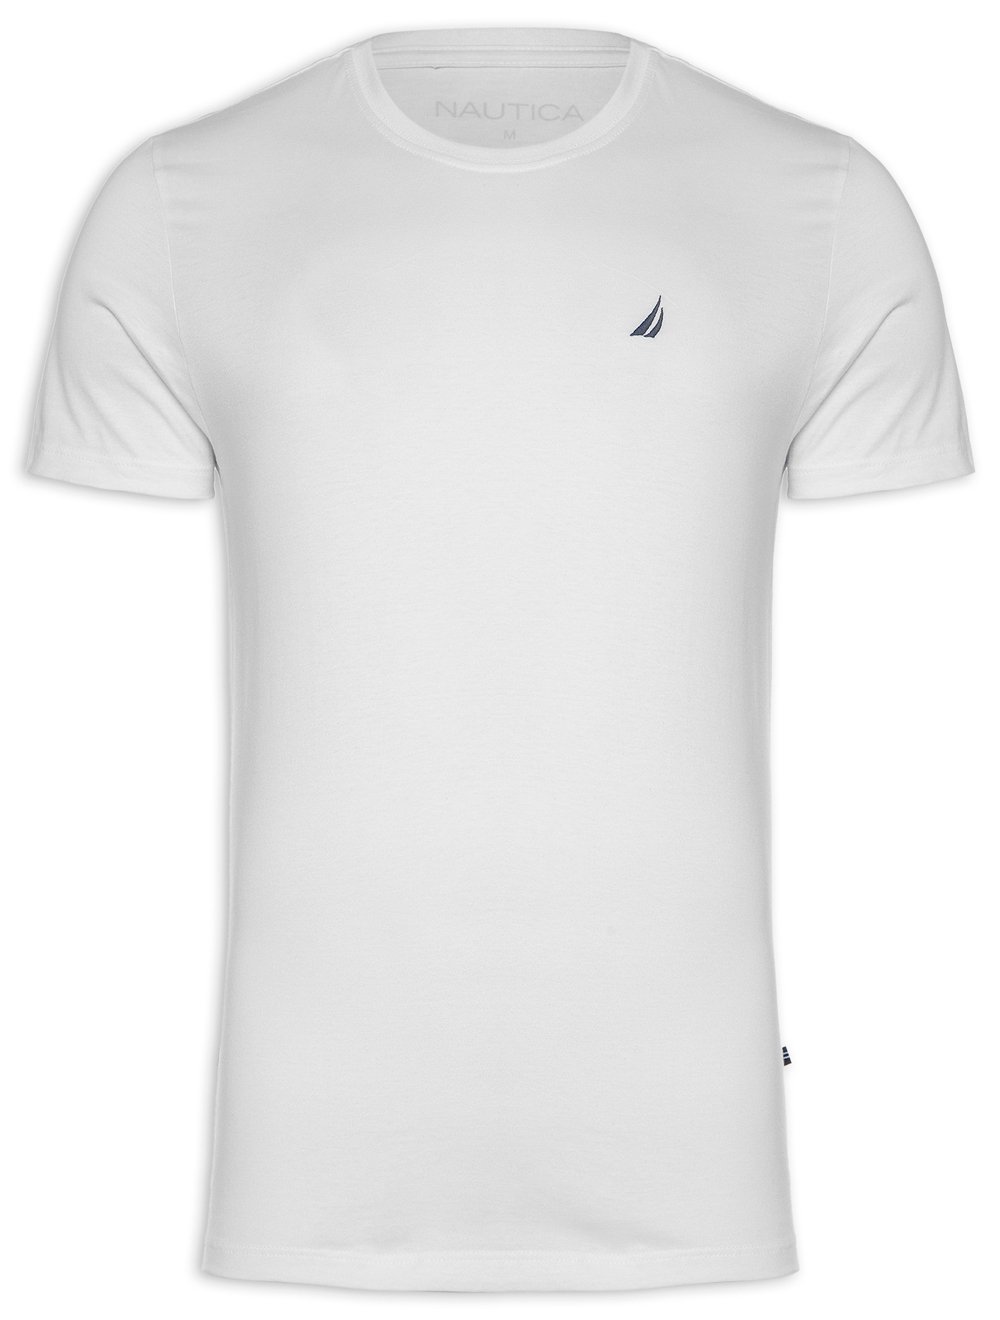 Camiseta Nautica Masculina Navy Icon Branca